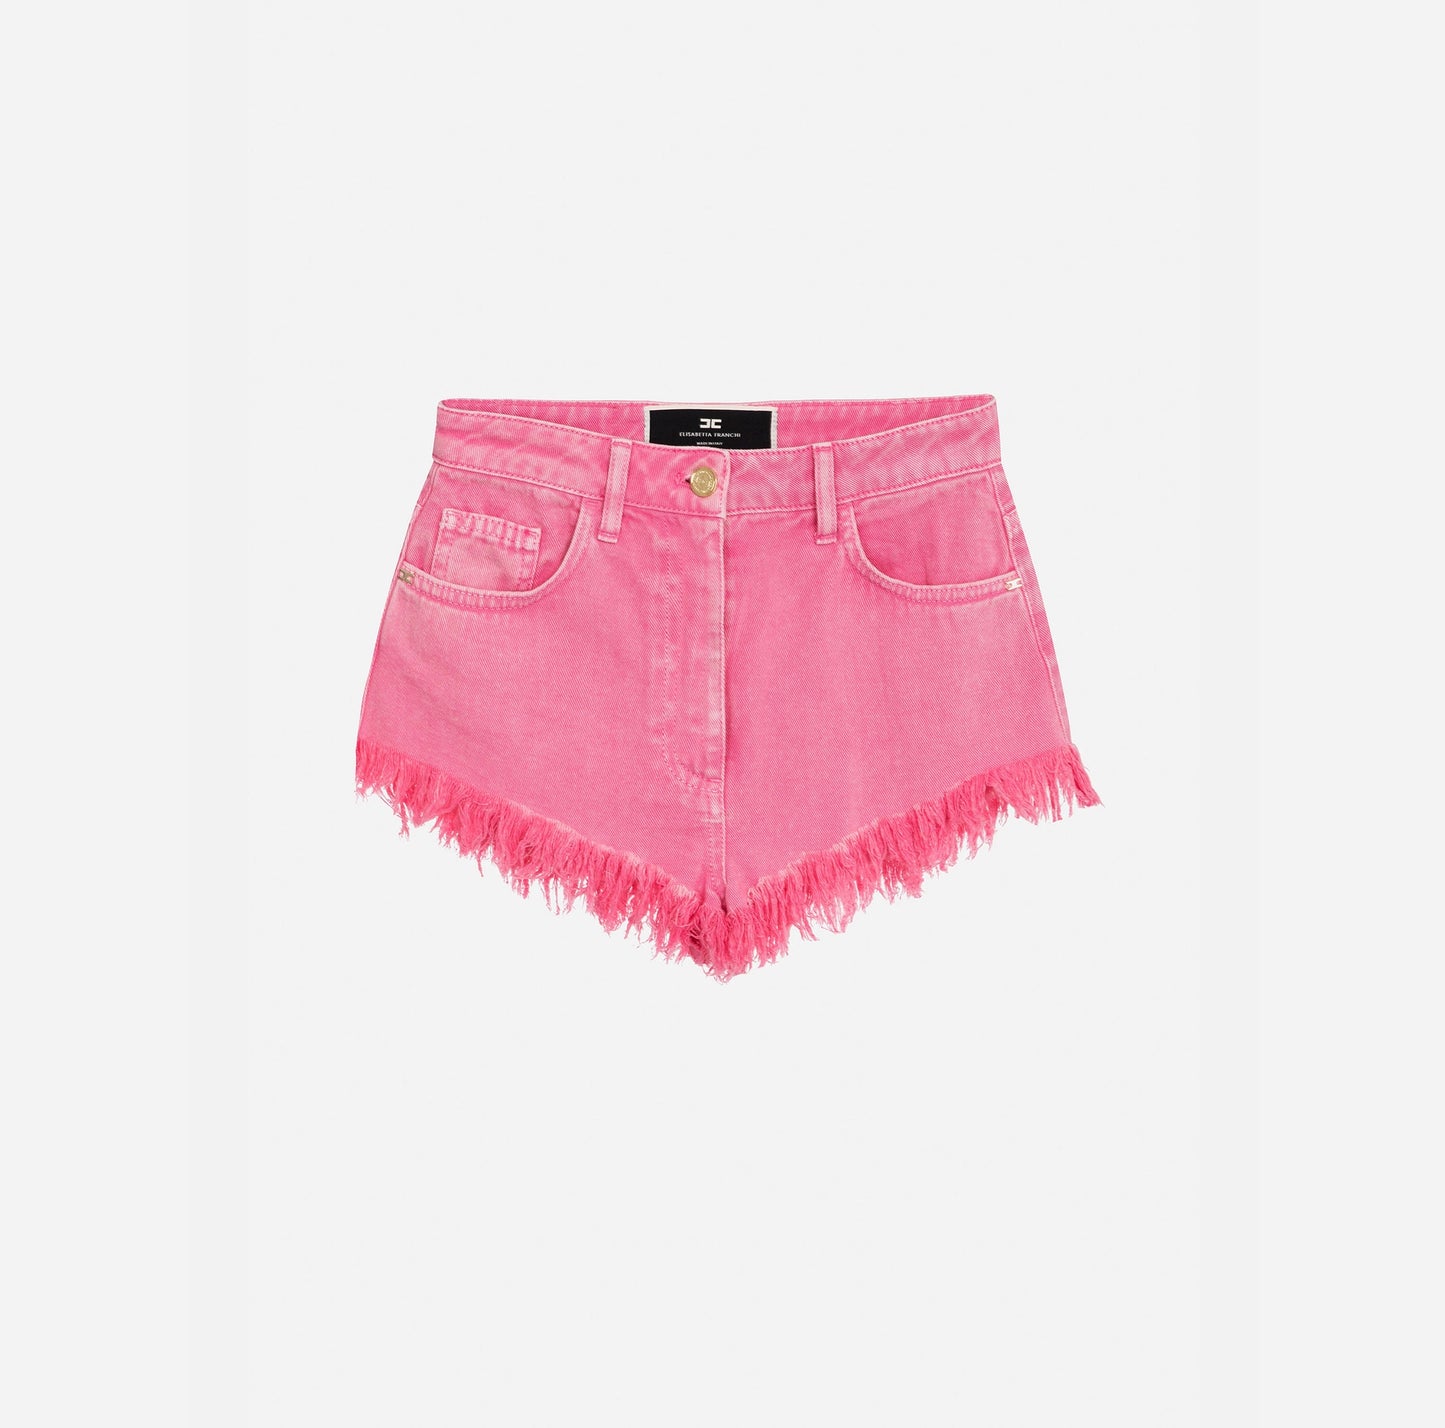 Garment-dyed cotton shorts